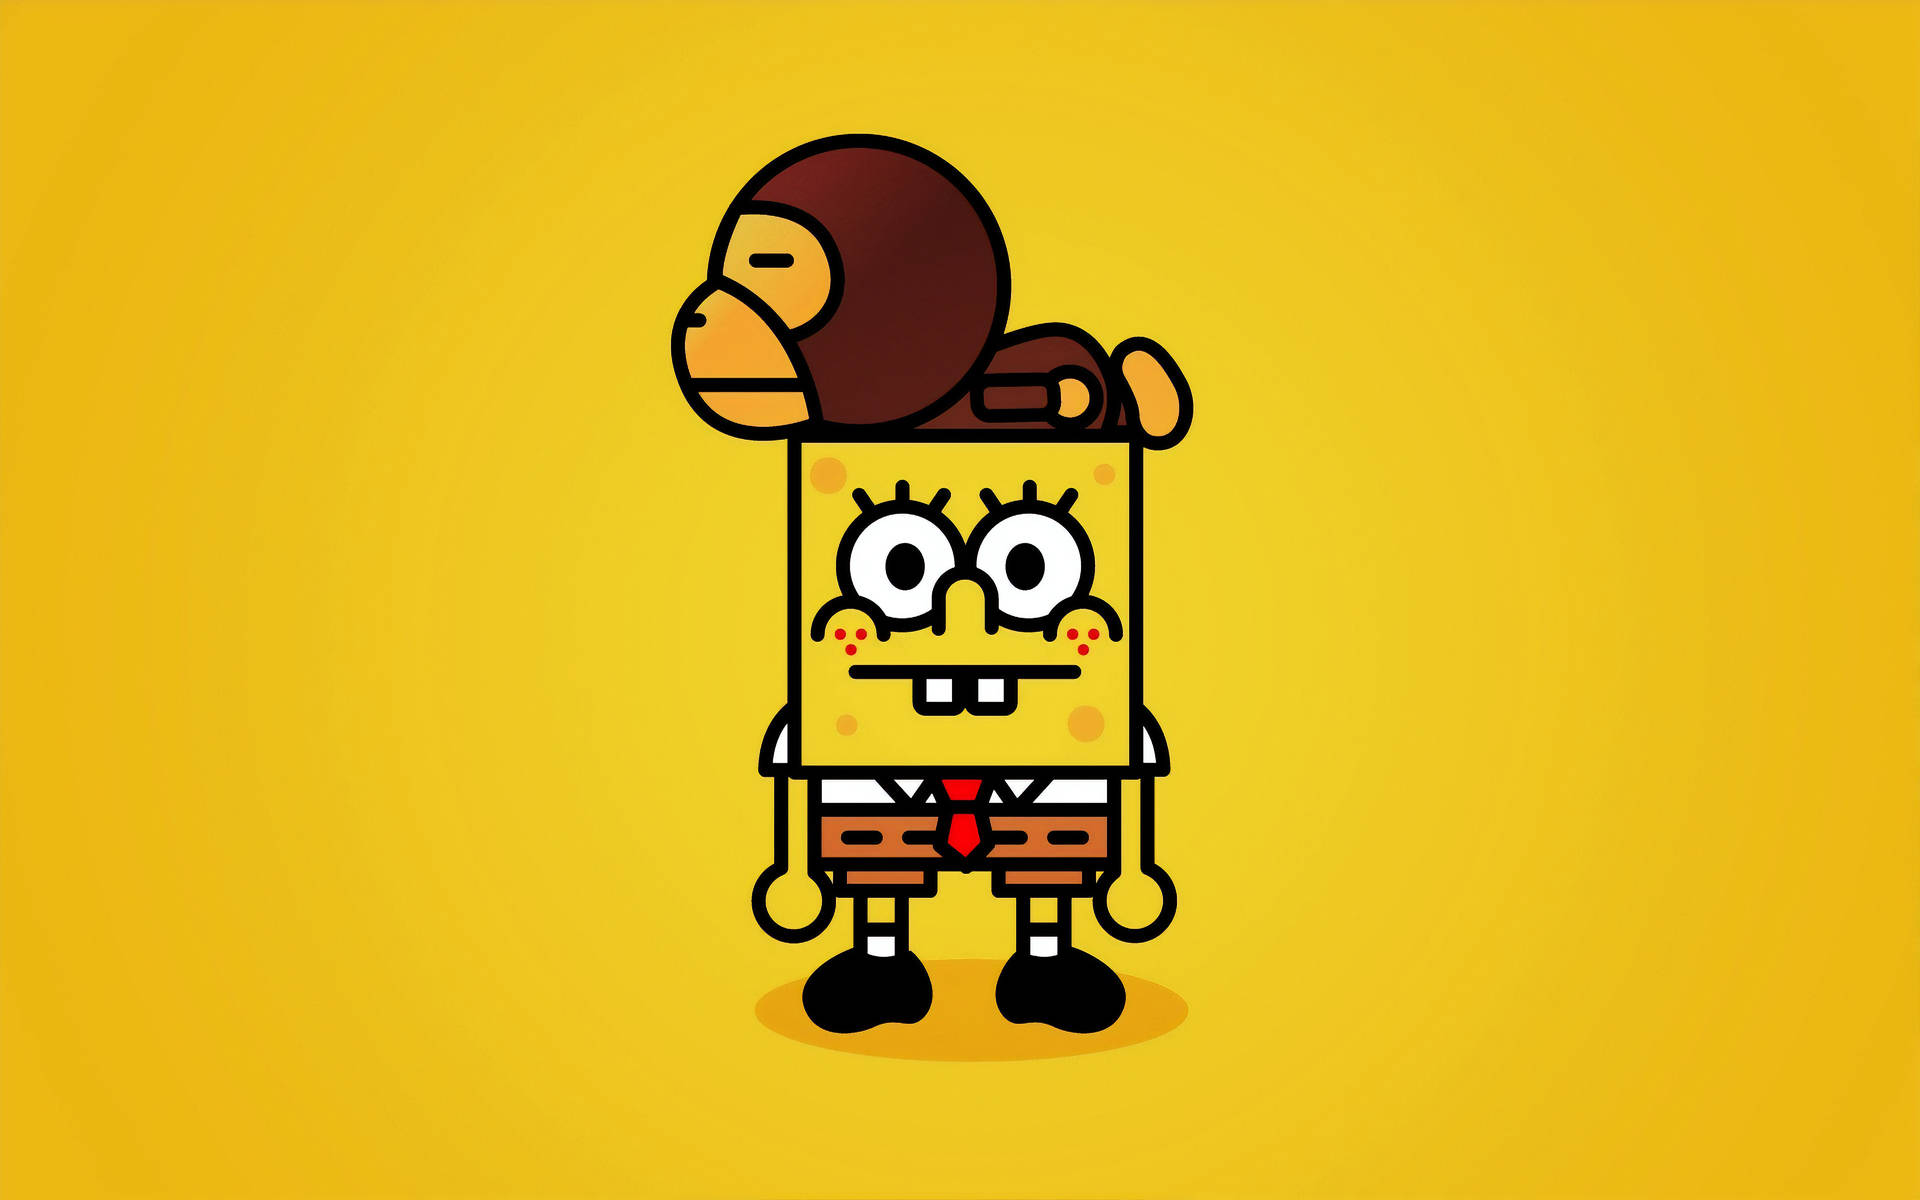 Spongebob Meme 3840X2400 Wallpaper and Background Image